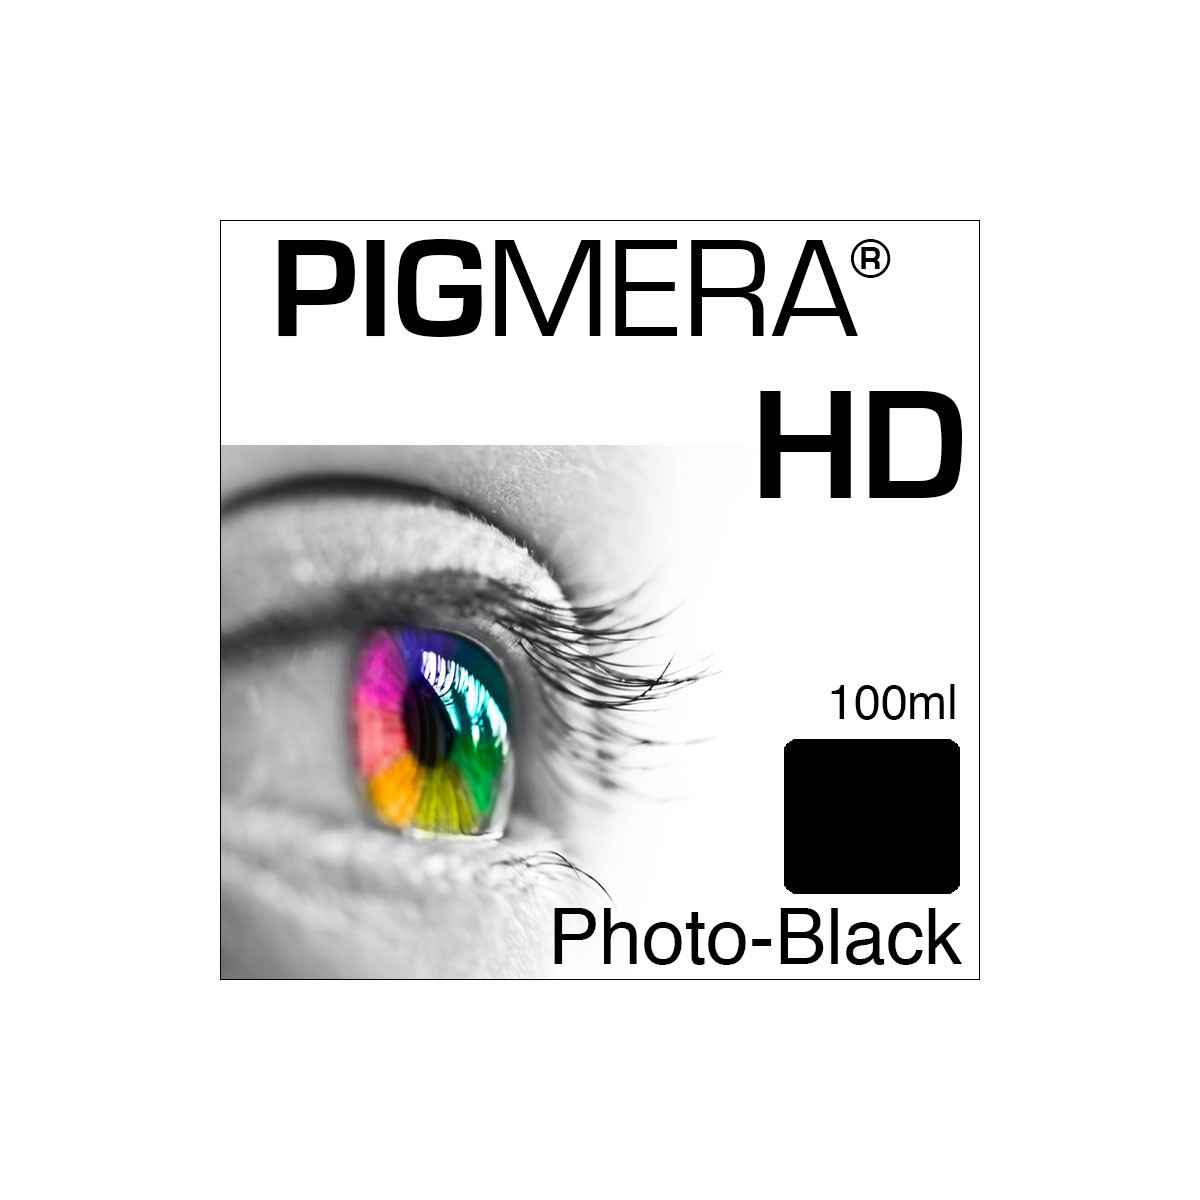 farbenwerk Pigmera HD Bottle Photo-Black 100ml